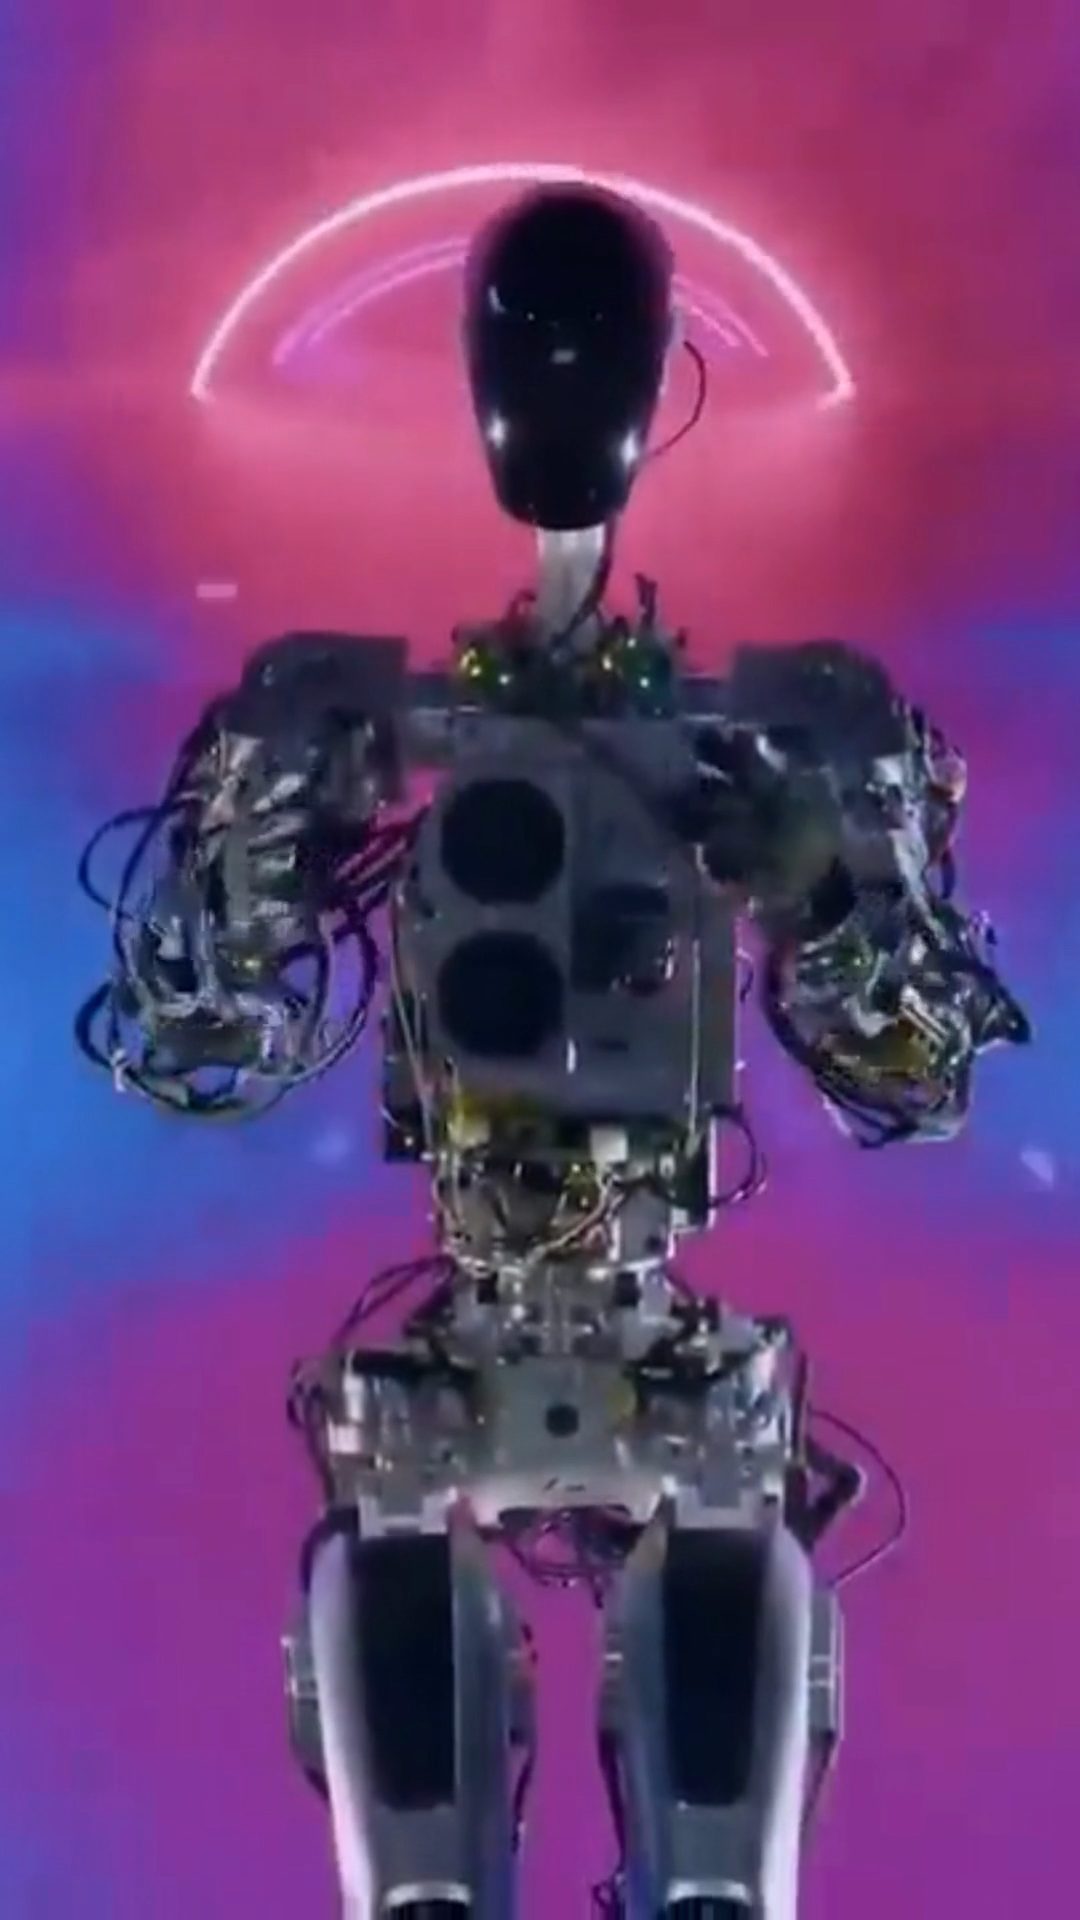 Elon-Musk-Tesla-Robots-What-Robotics-Experts-Think-3-poster